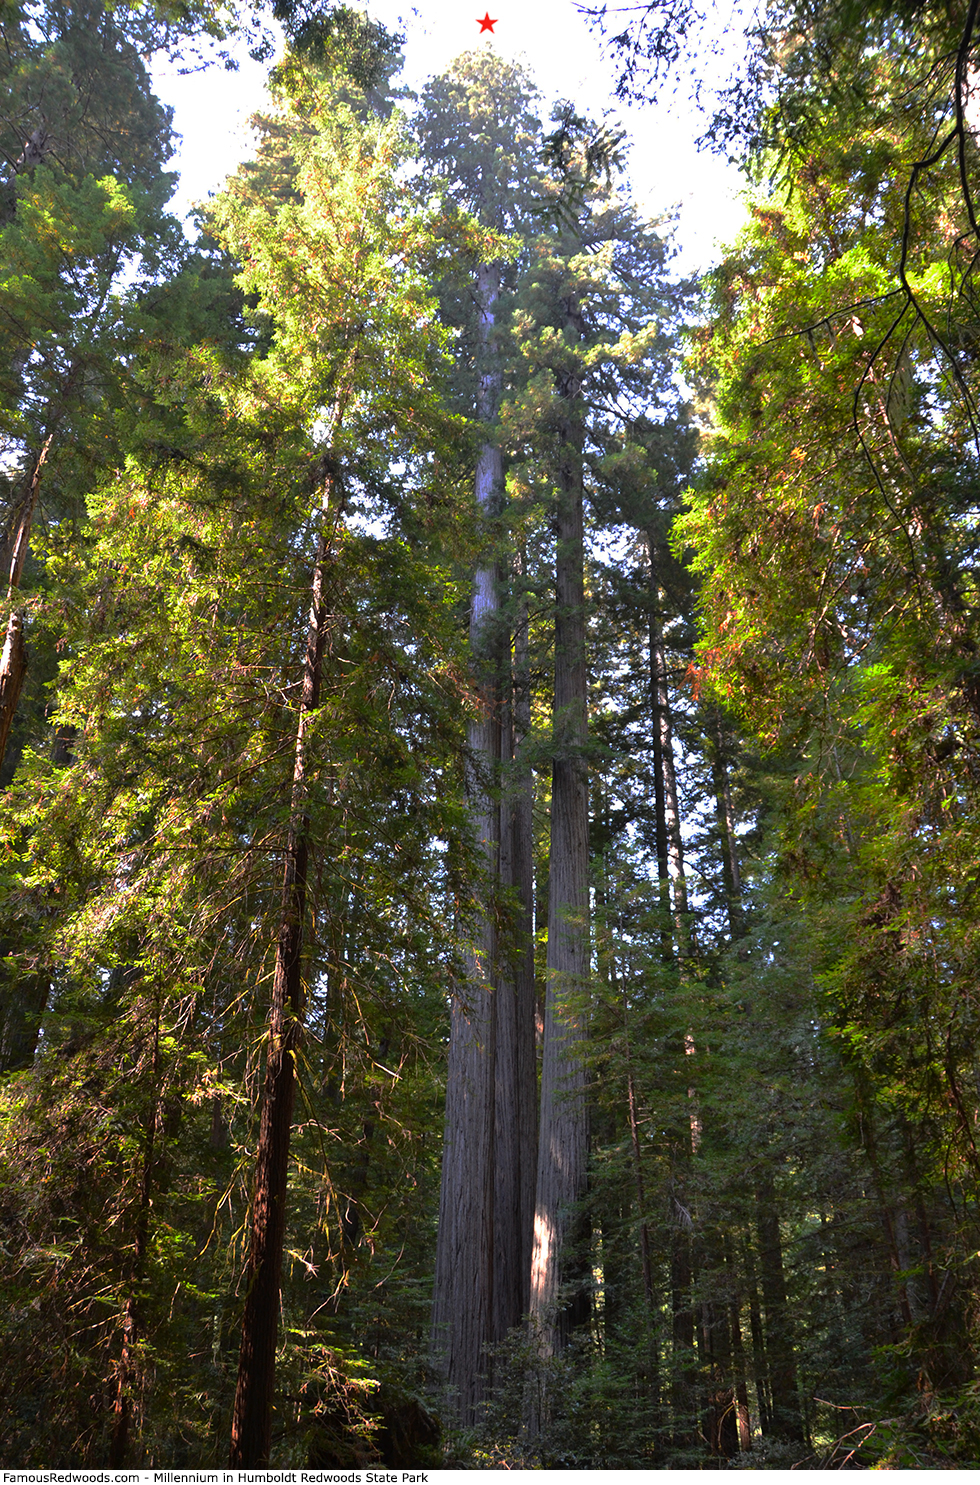 Humboldt Redwoods State Park - Millennium Tree